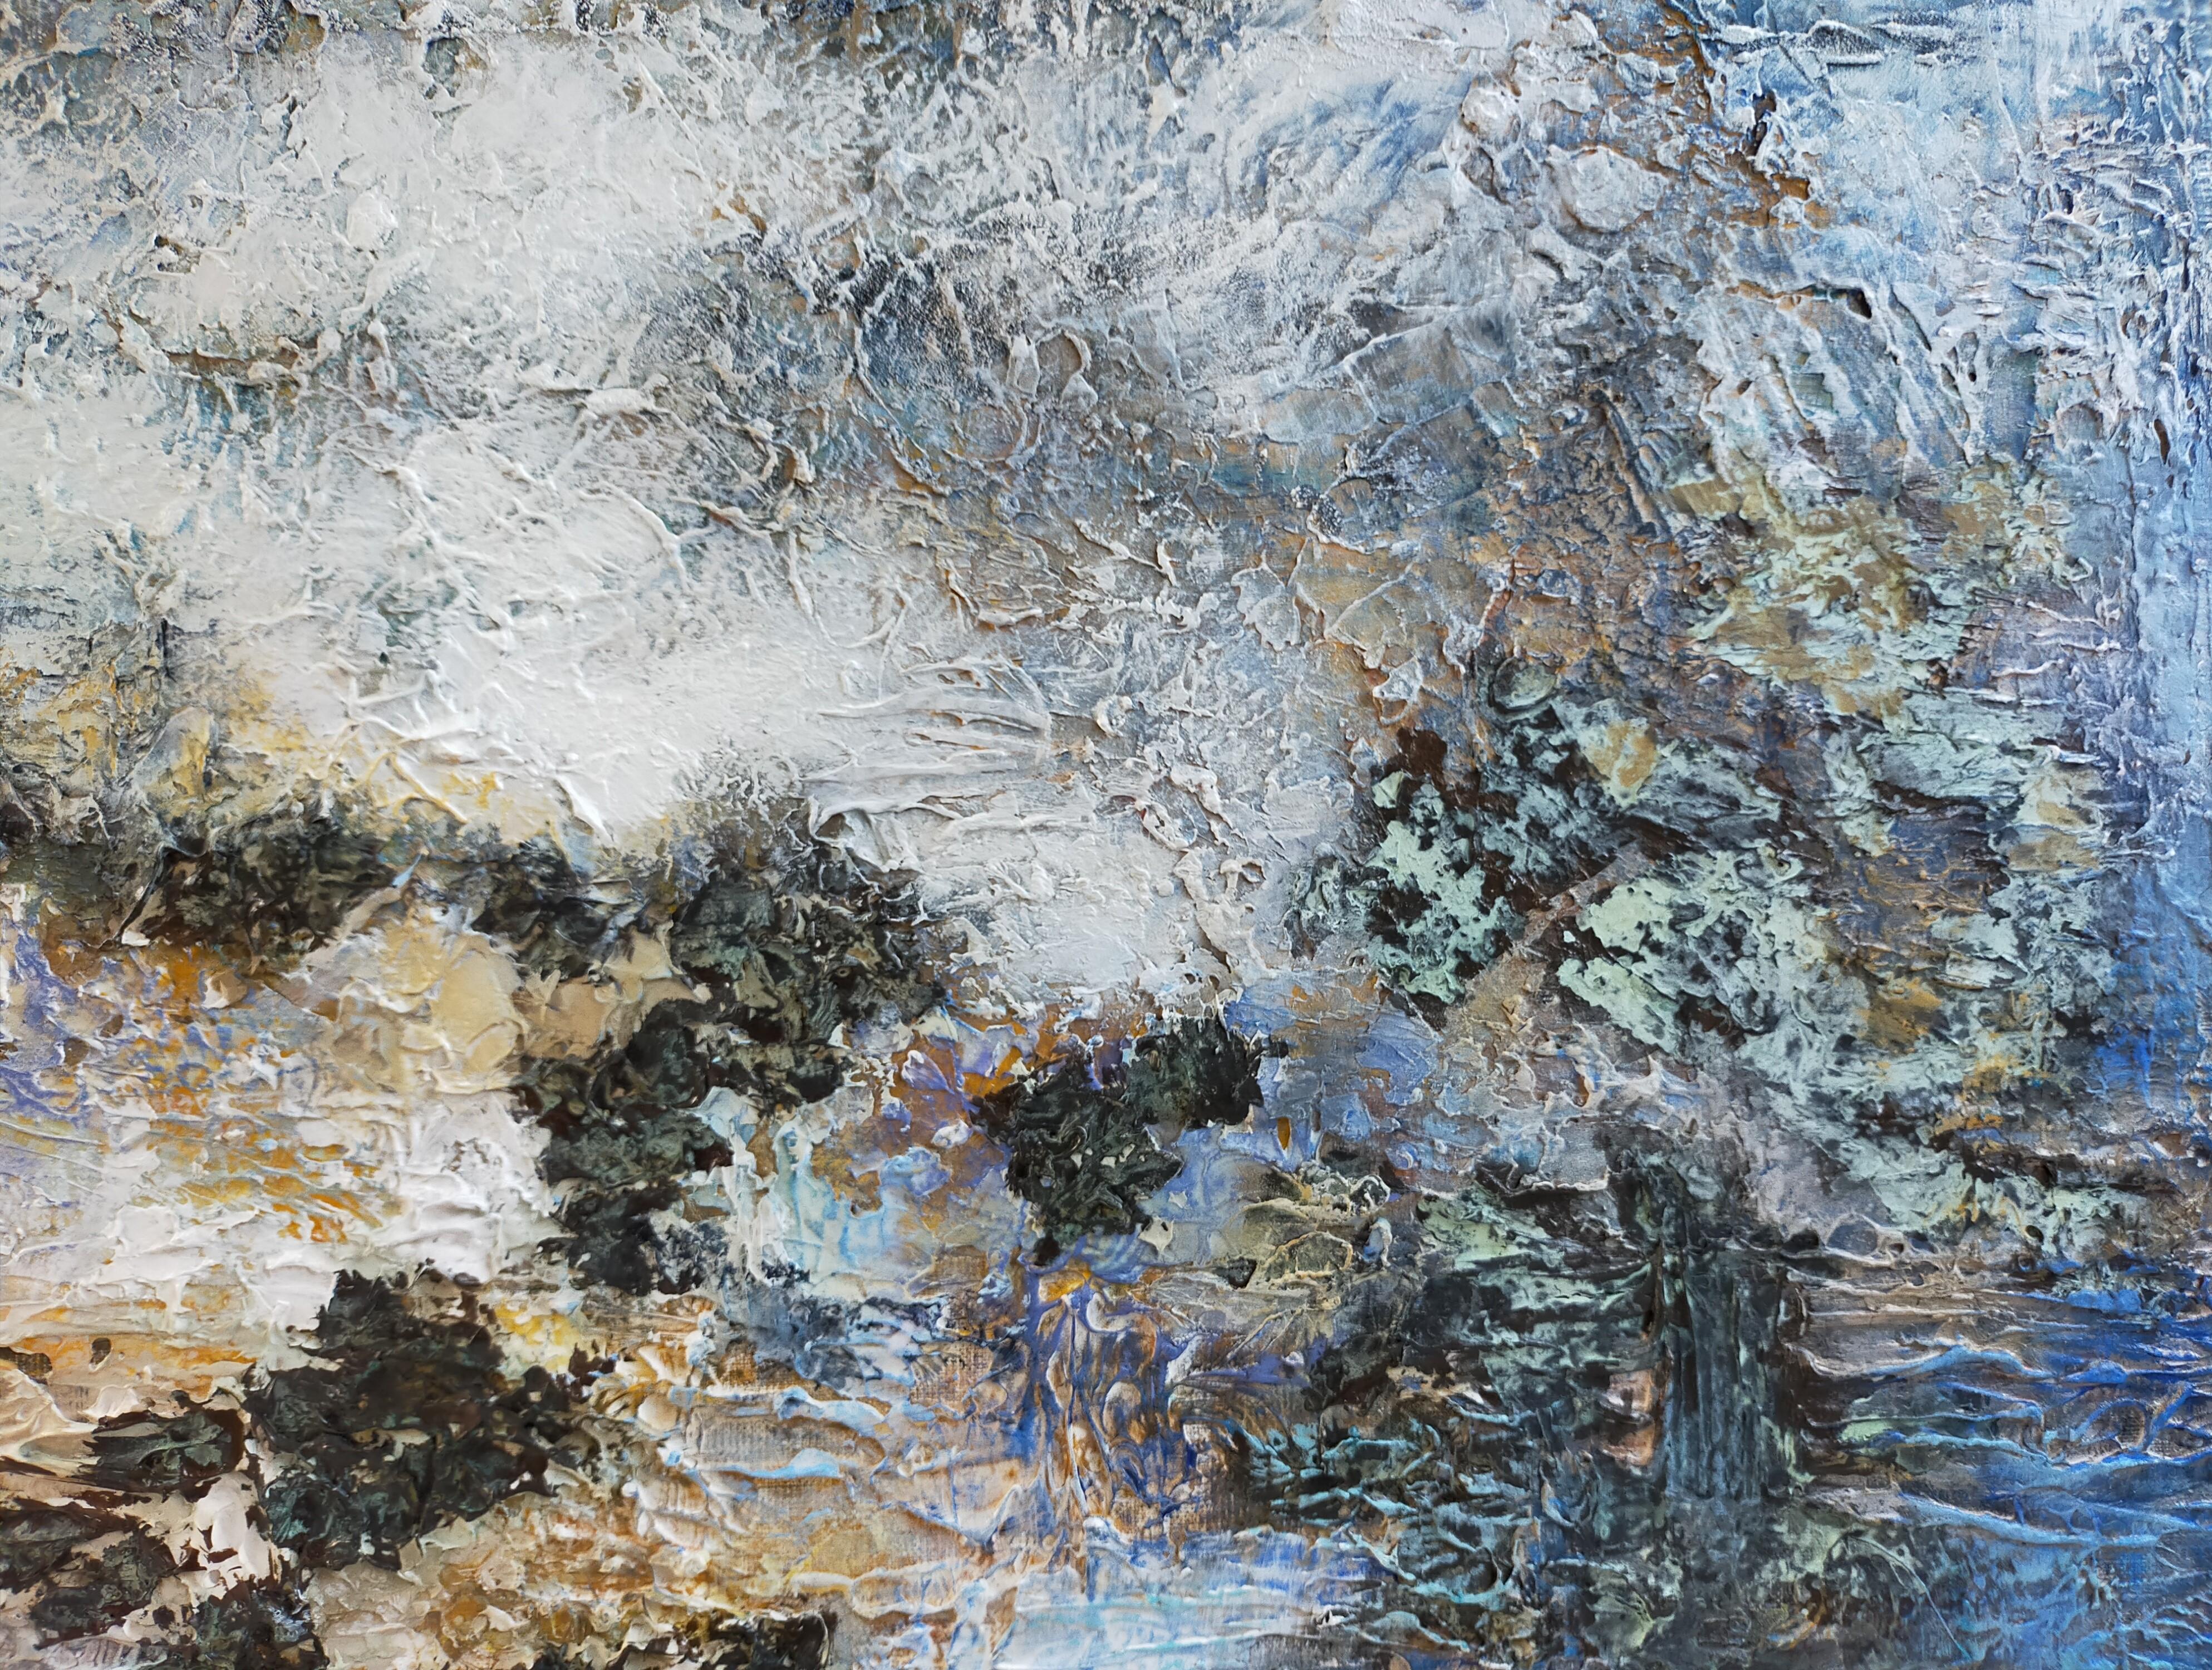 « The salty air of roscoff », oxydation acrylique abstraite sur toile de lin 100x80cm en vente 1